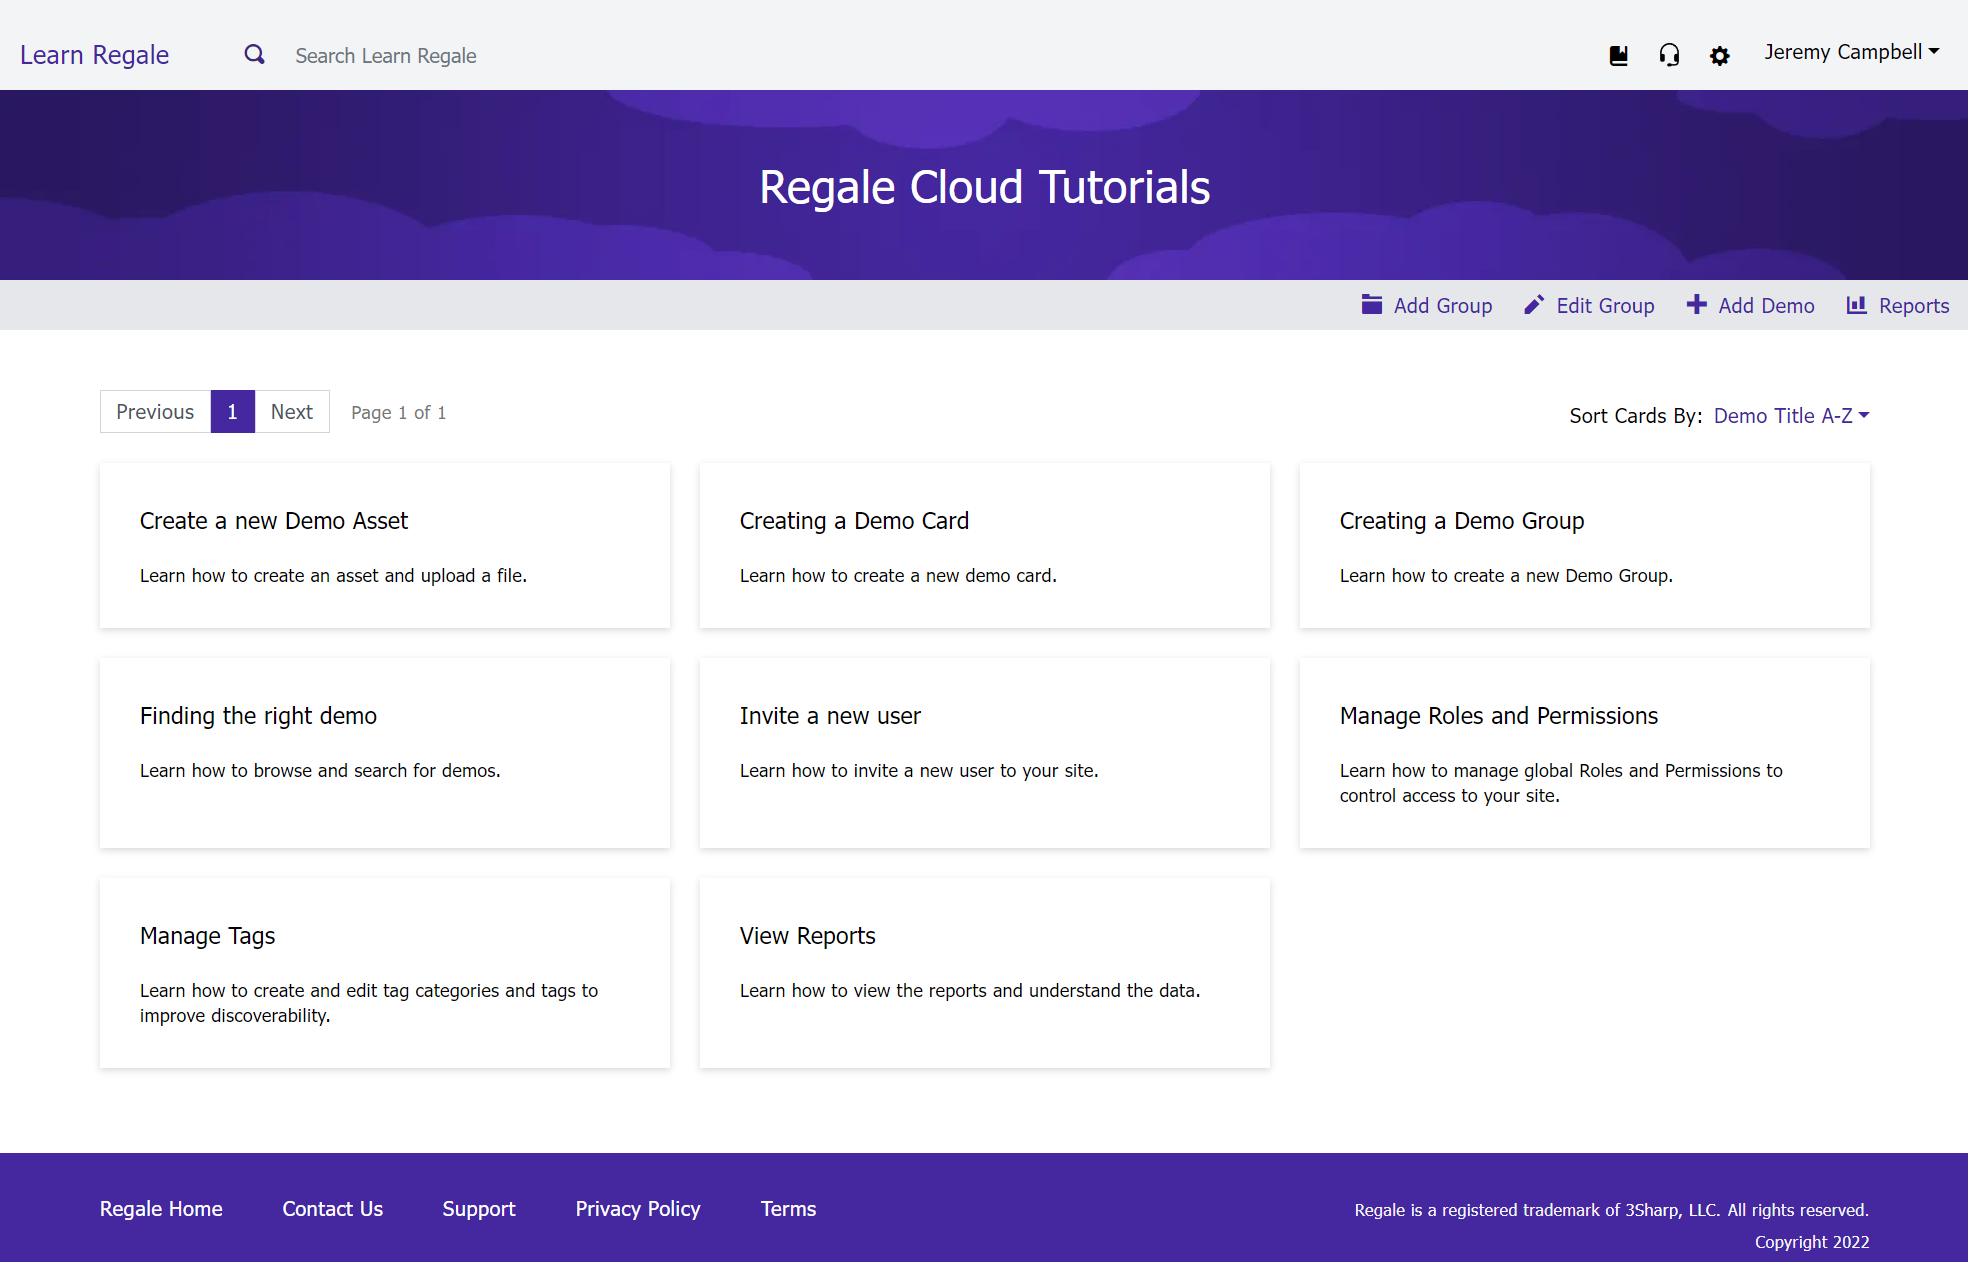 Regale Cloud demo site listing available demos.